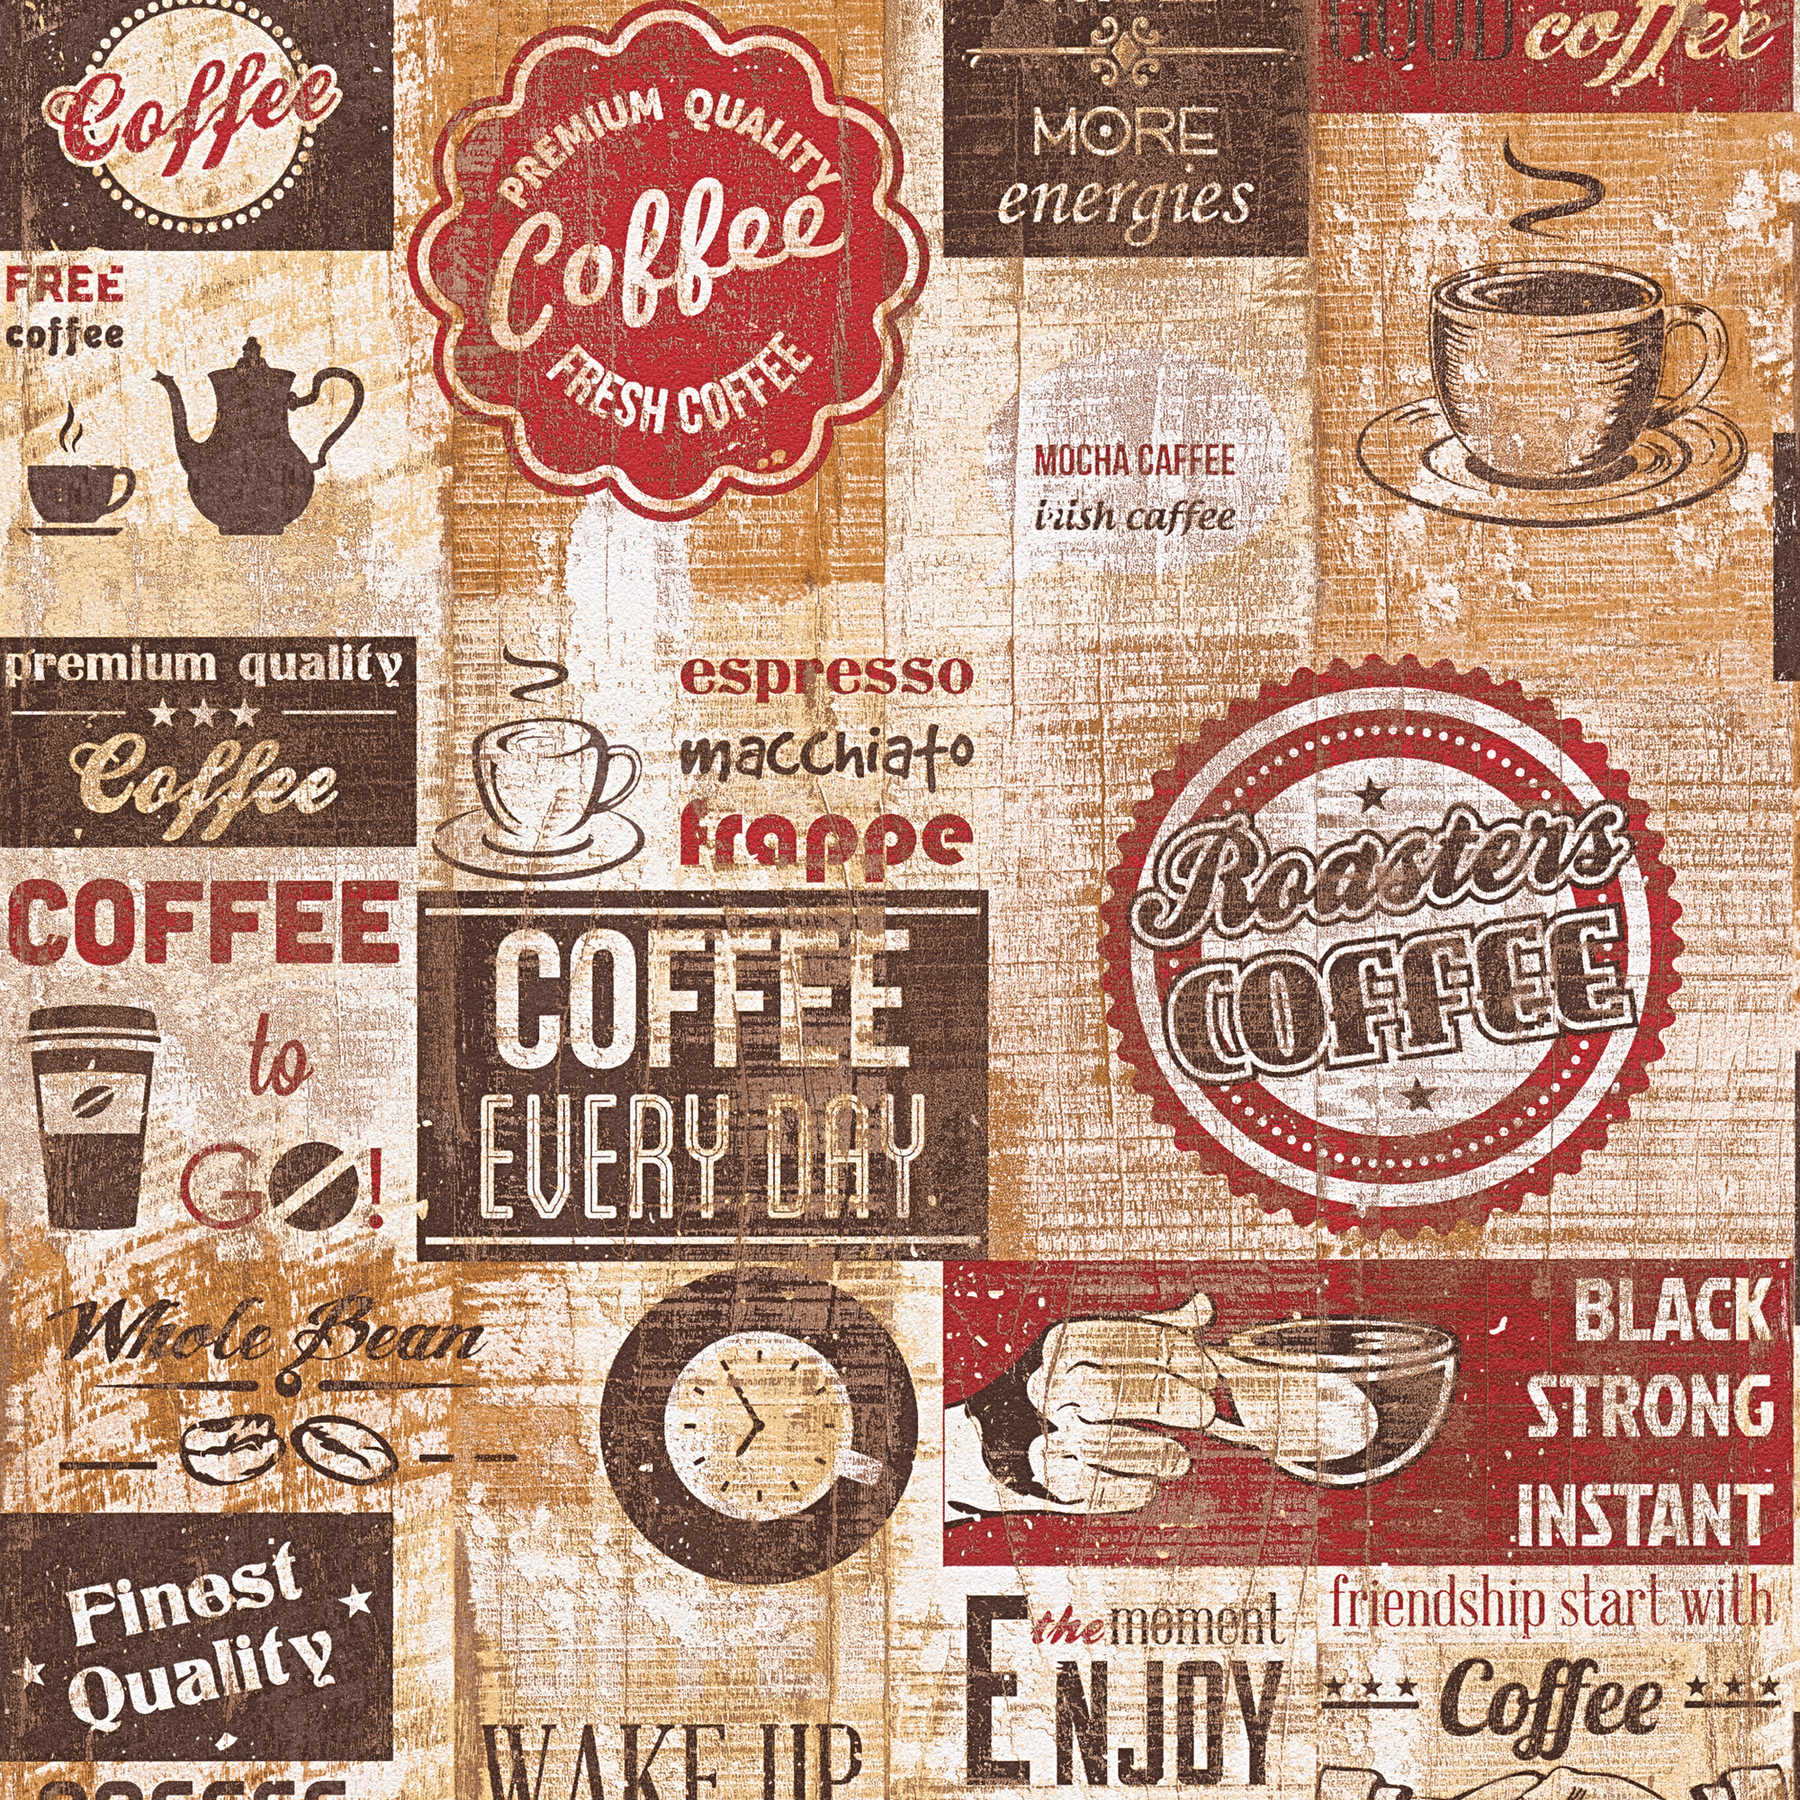         Koffie Patroon Behang, Amerikaanse Diner Stijl - Bruin, Rood
    